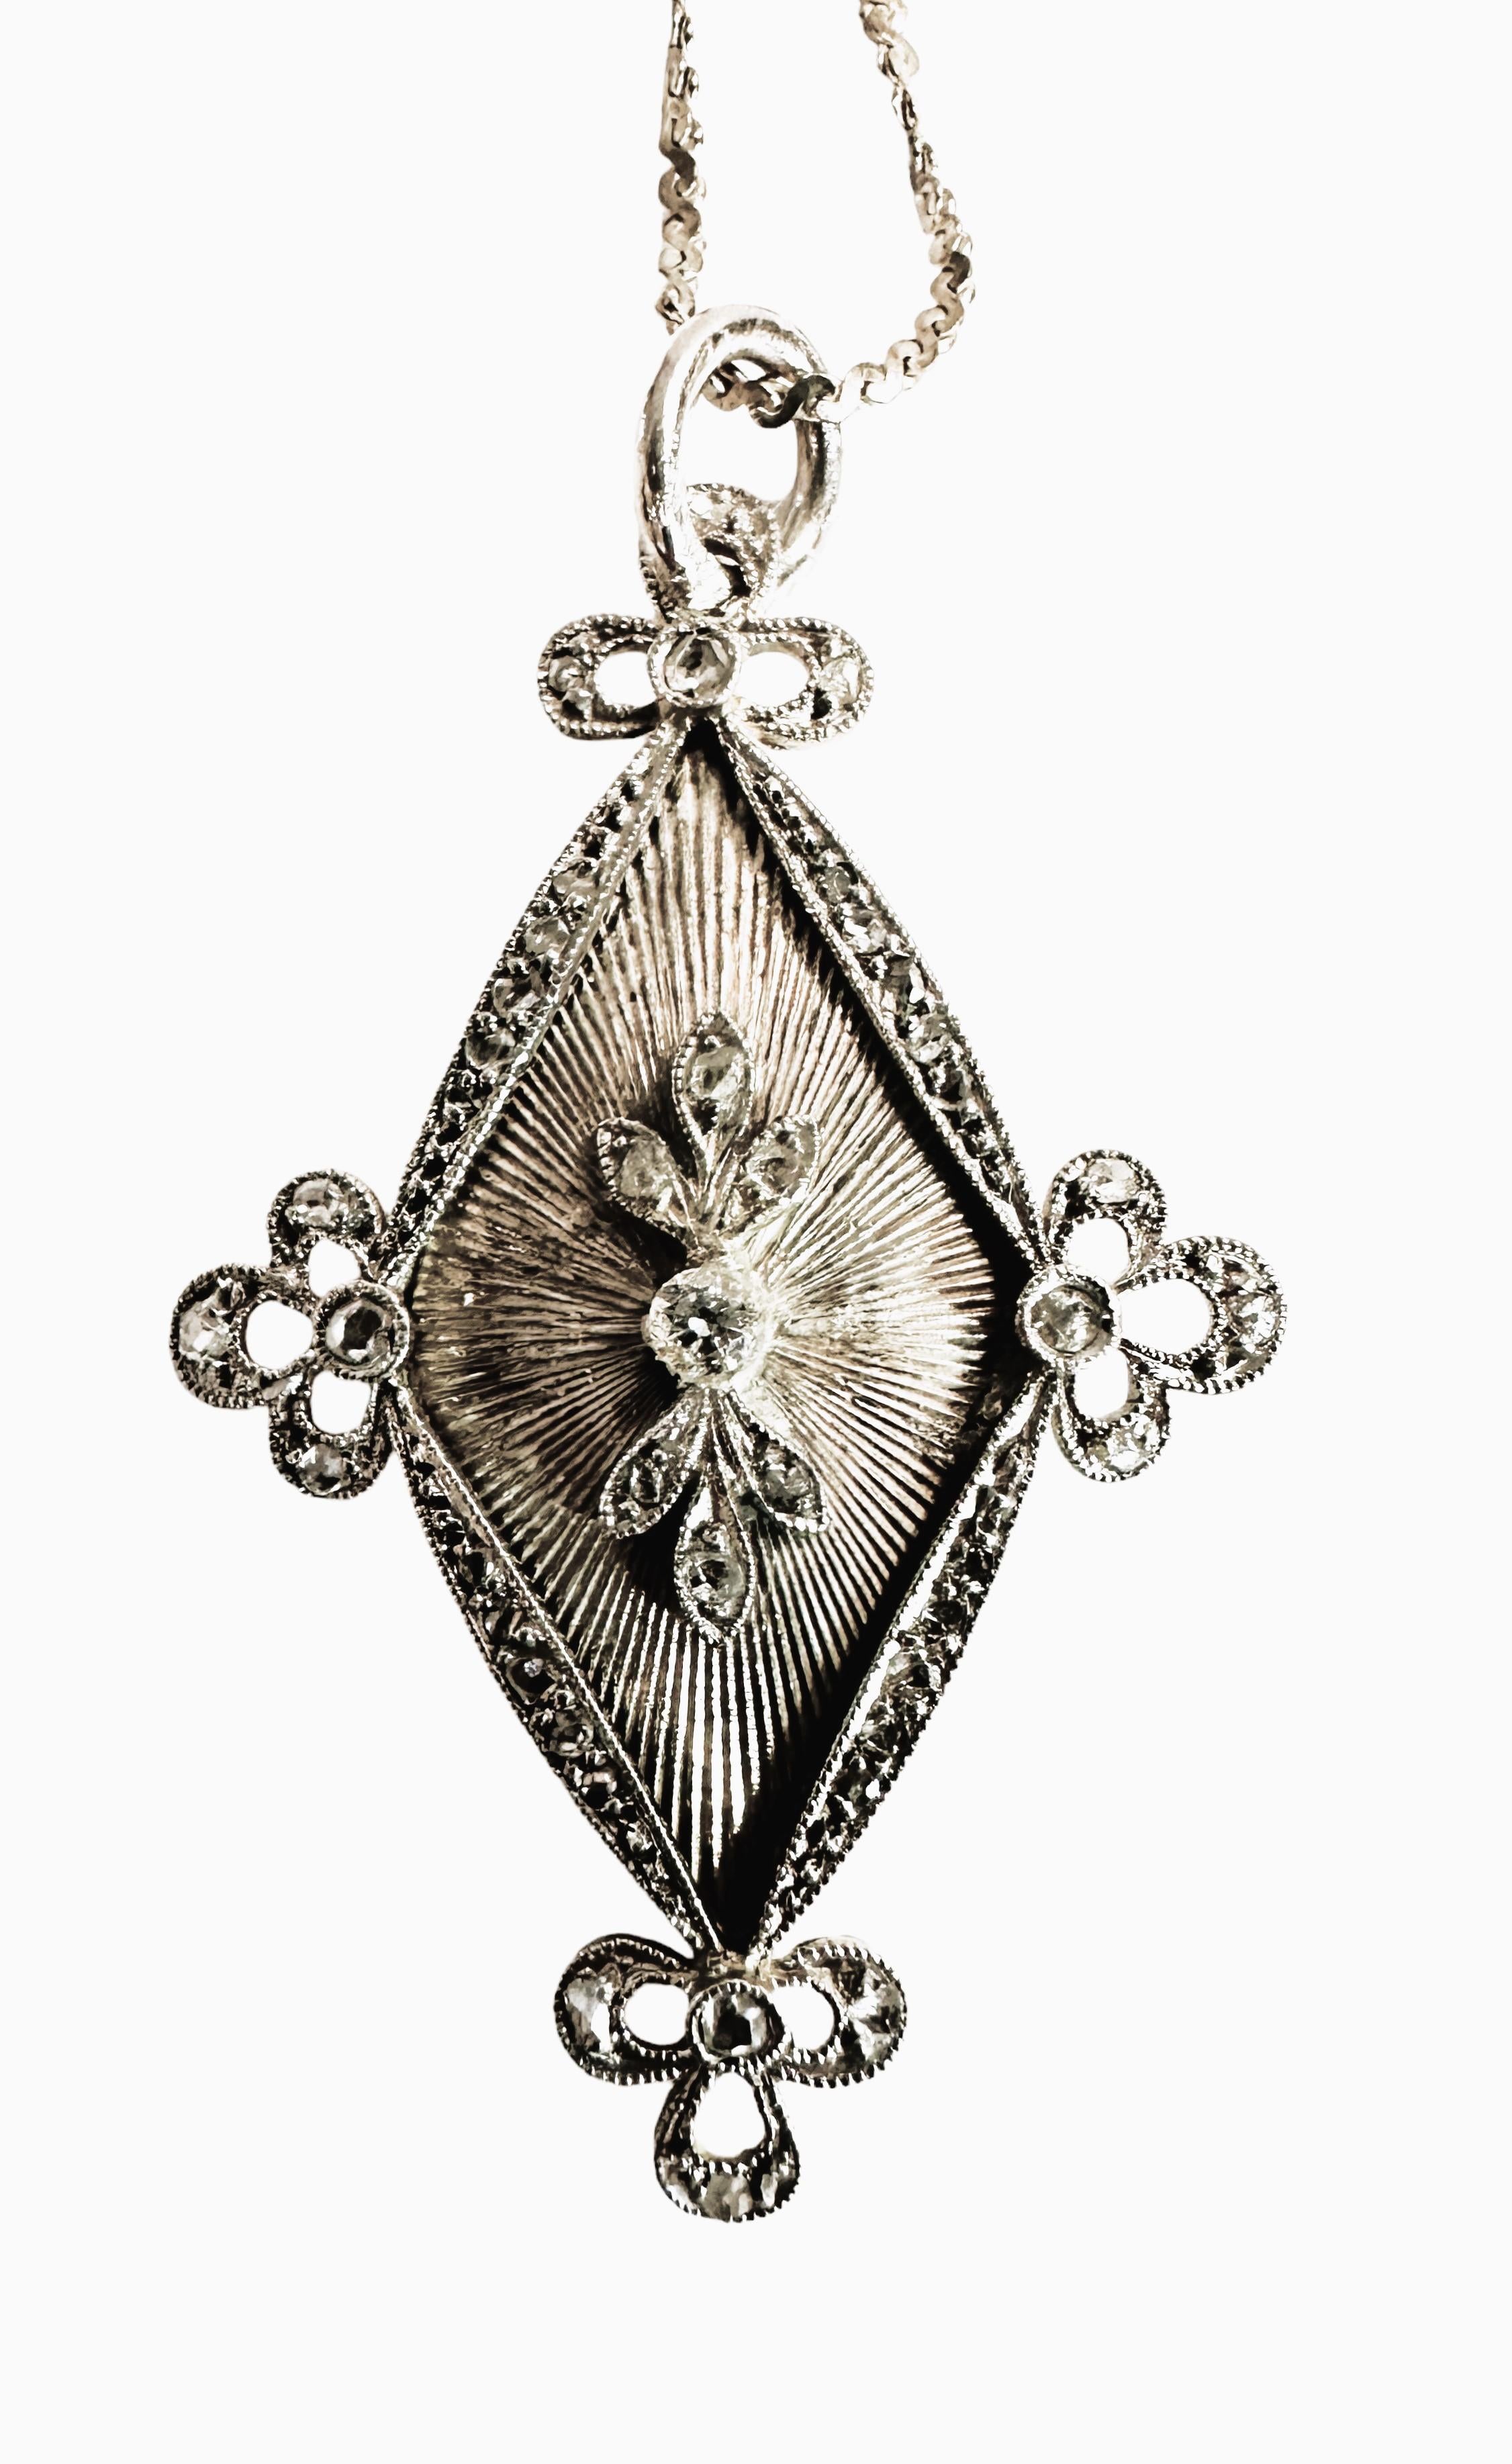 Antique 14k WG Rose Cut & Mine Cut Diamond Pendant w 14k White Gold 18